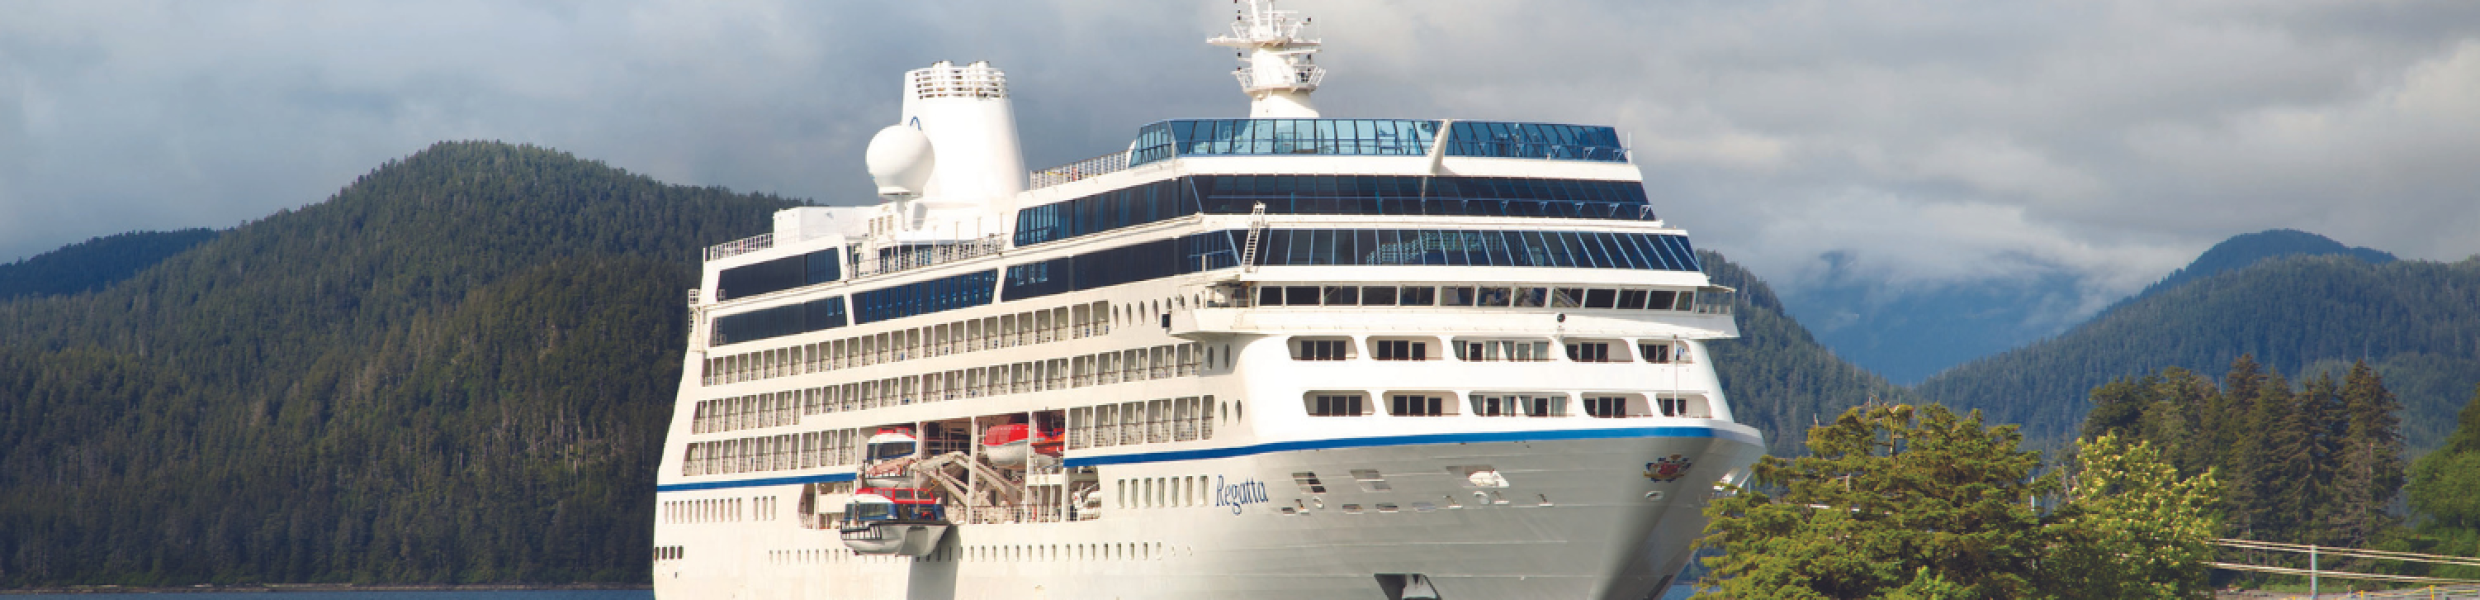 Oceania Regatta USA River Cruises